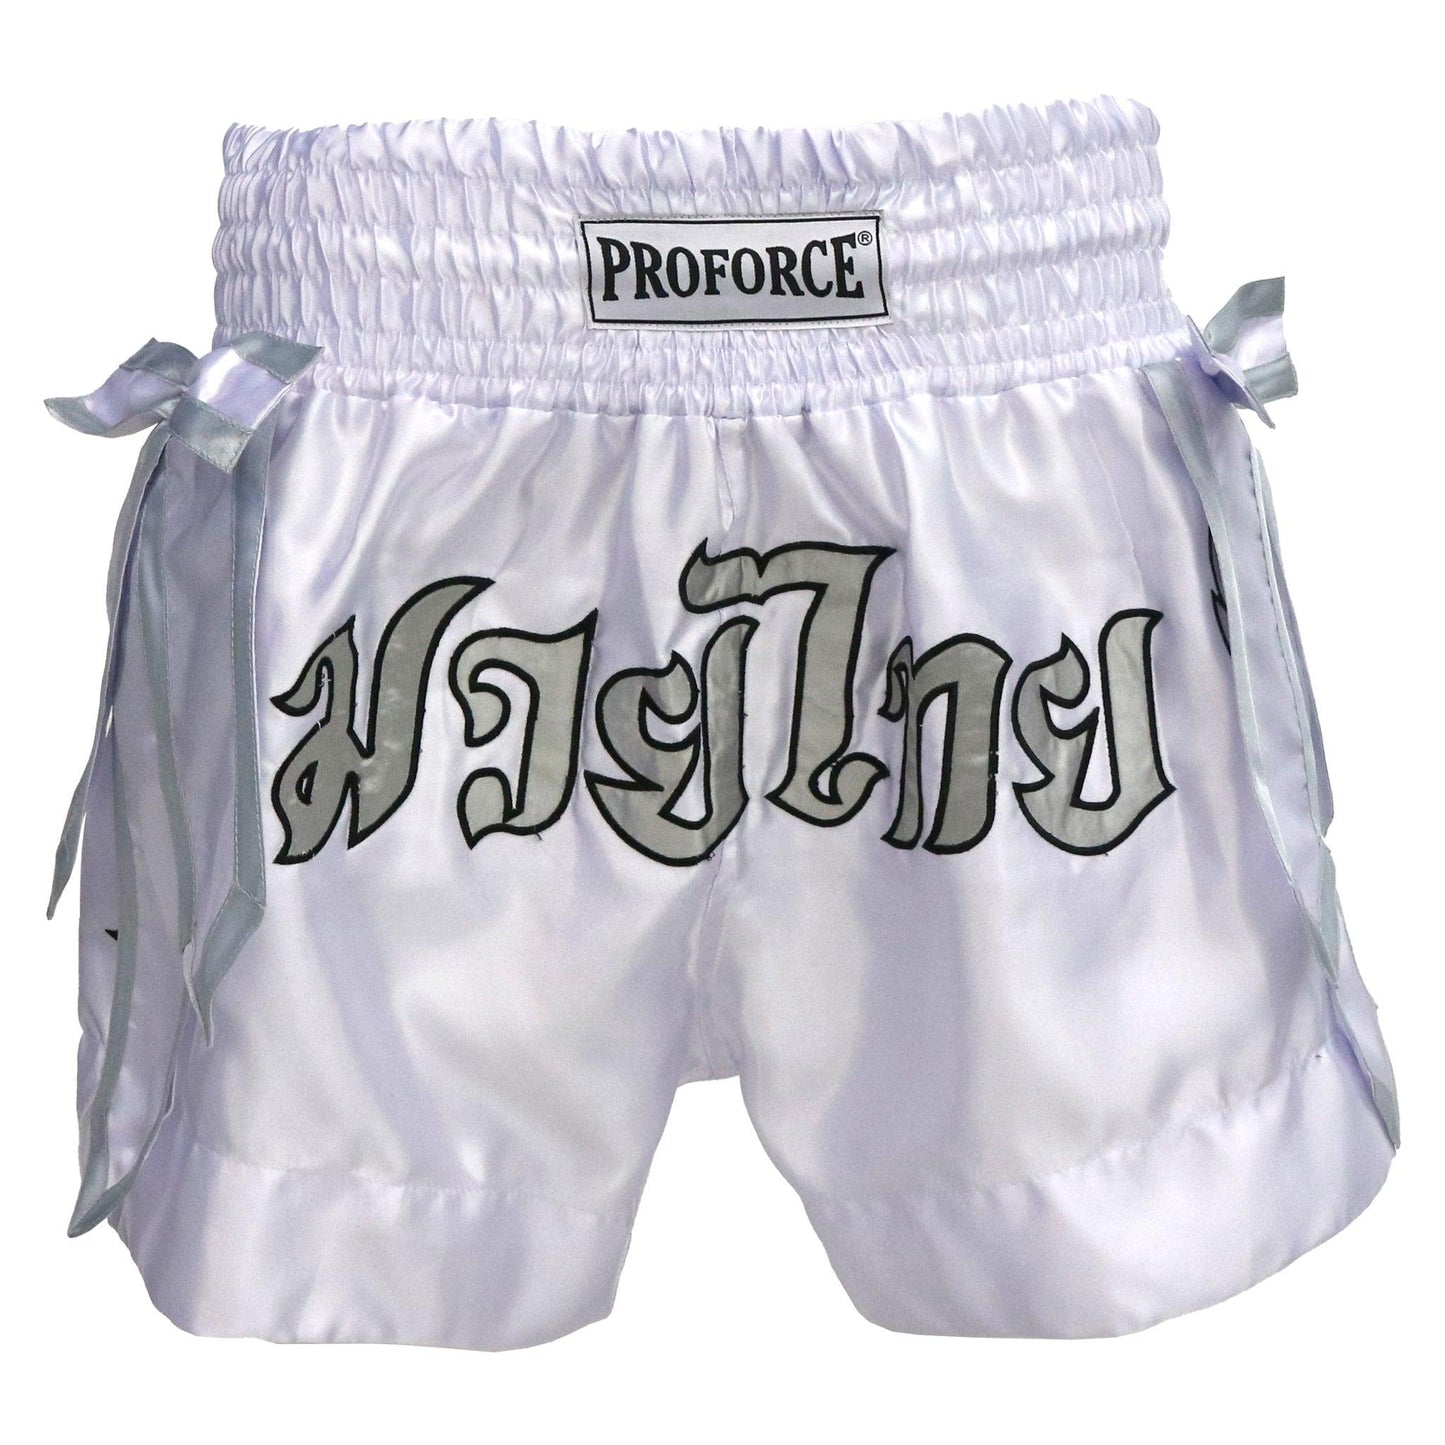 ProForce Sport Angel Wing Muay Thai Shorts - w/ White Bows - Violent Art Shop